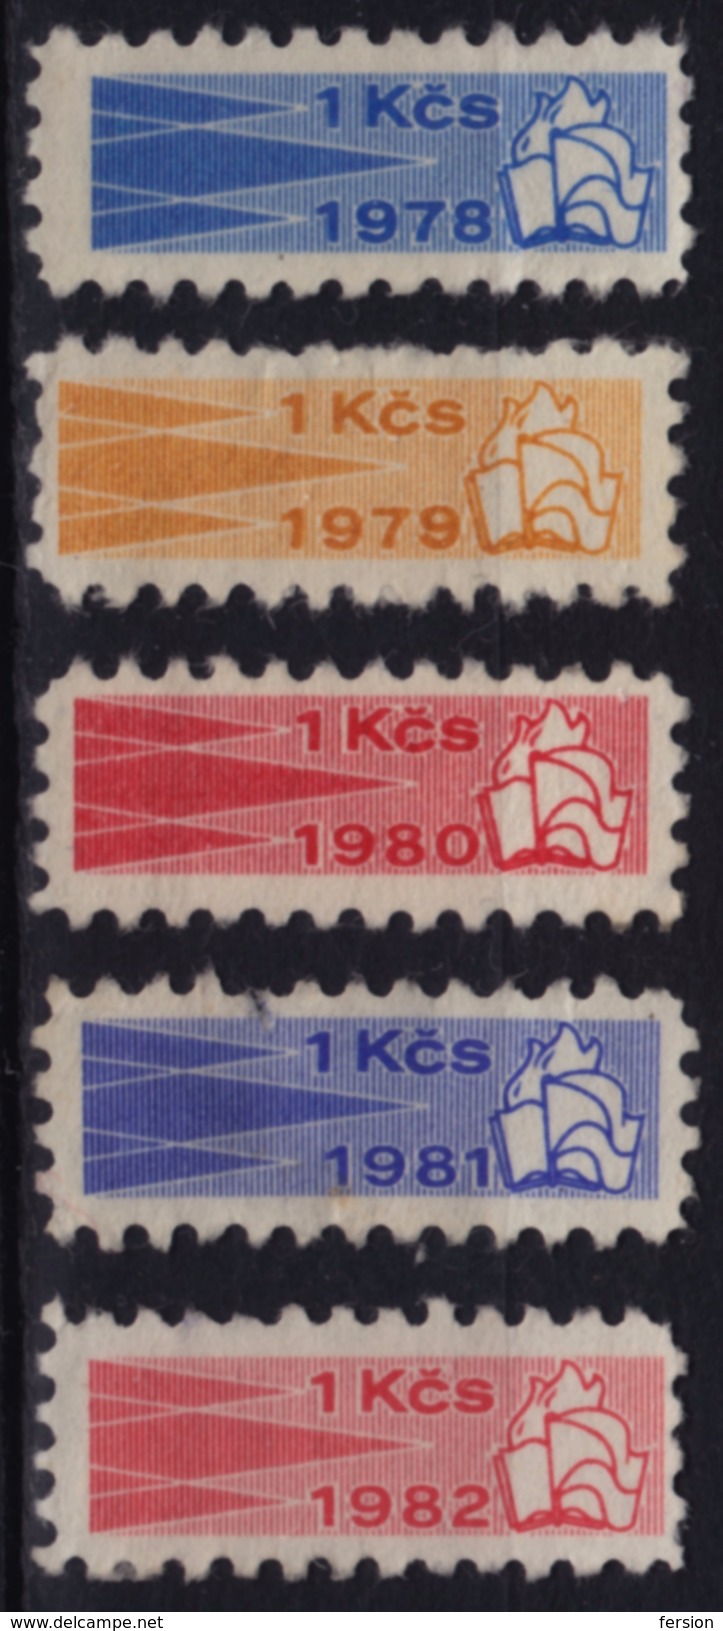 Kontrolní Znamka Controll Member Stamp 1978 1979 1980 1981 1982 Czechoslovakia Label Cinderella Vignette FLAG BOKK FLAME - Timbres De Service